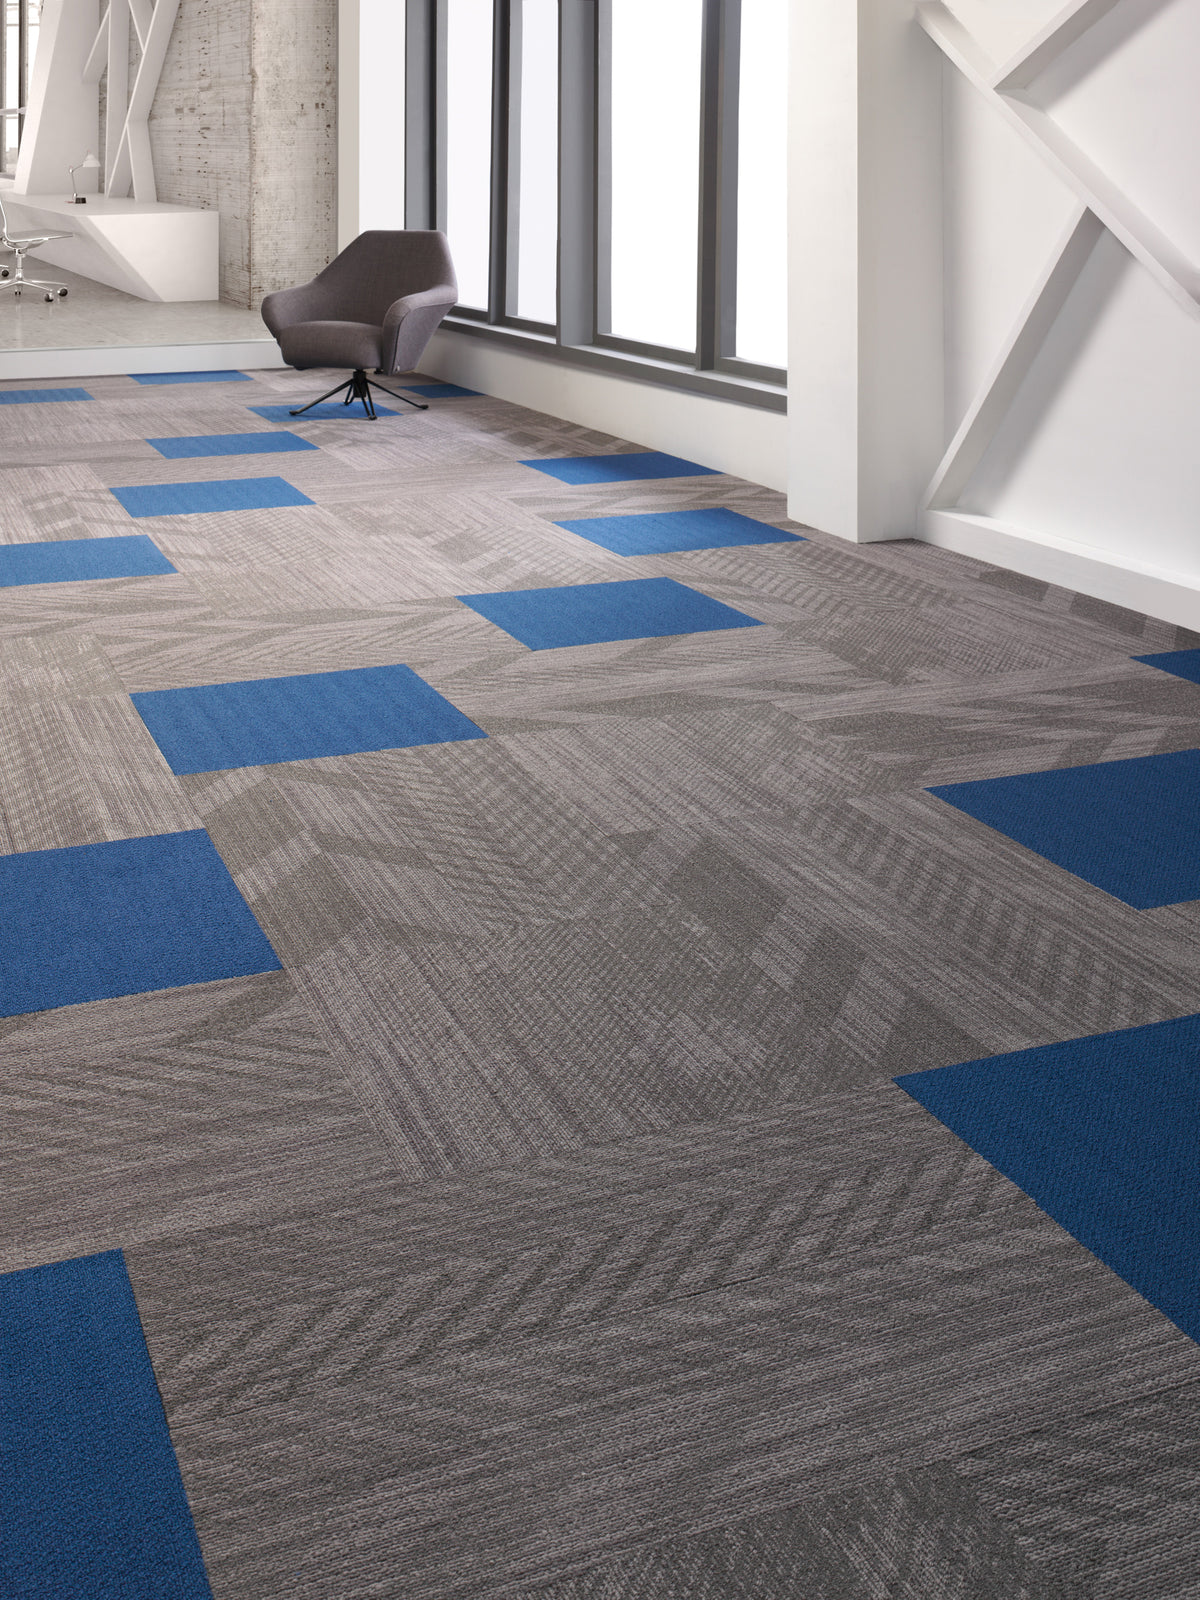 Mohawk Group - Colorbeat - Commercial Carpet Tile - Eggshell